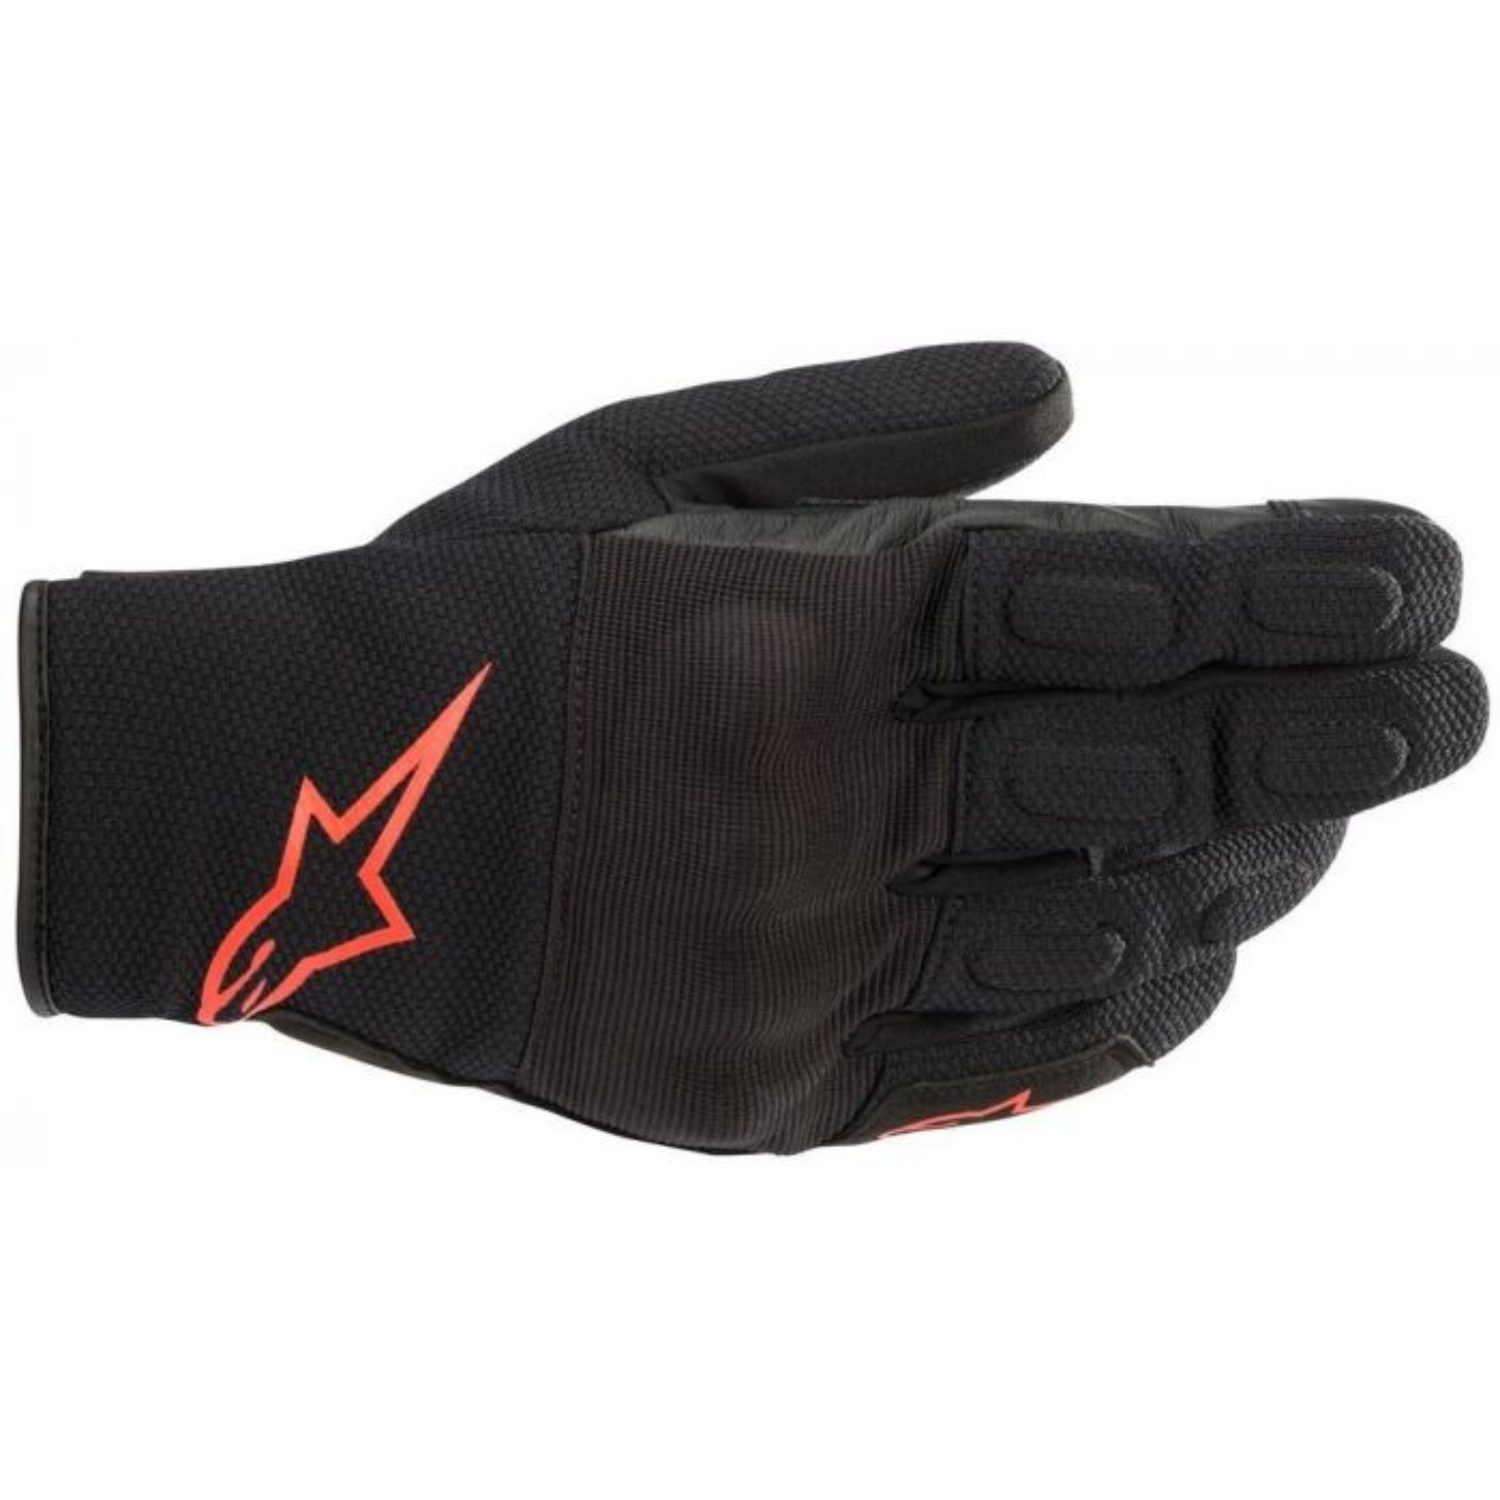 Image of EU Alpinestars S Max Drystar Gloves Black Red Fluo Taille S